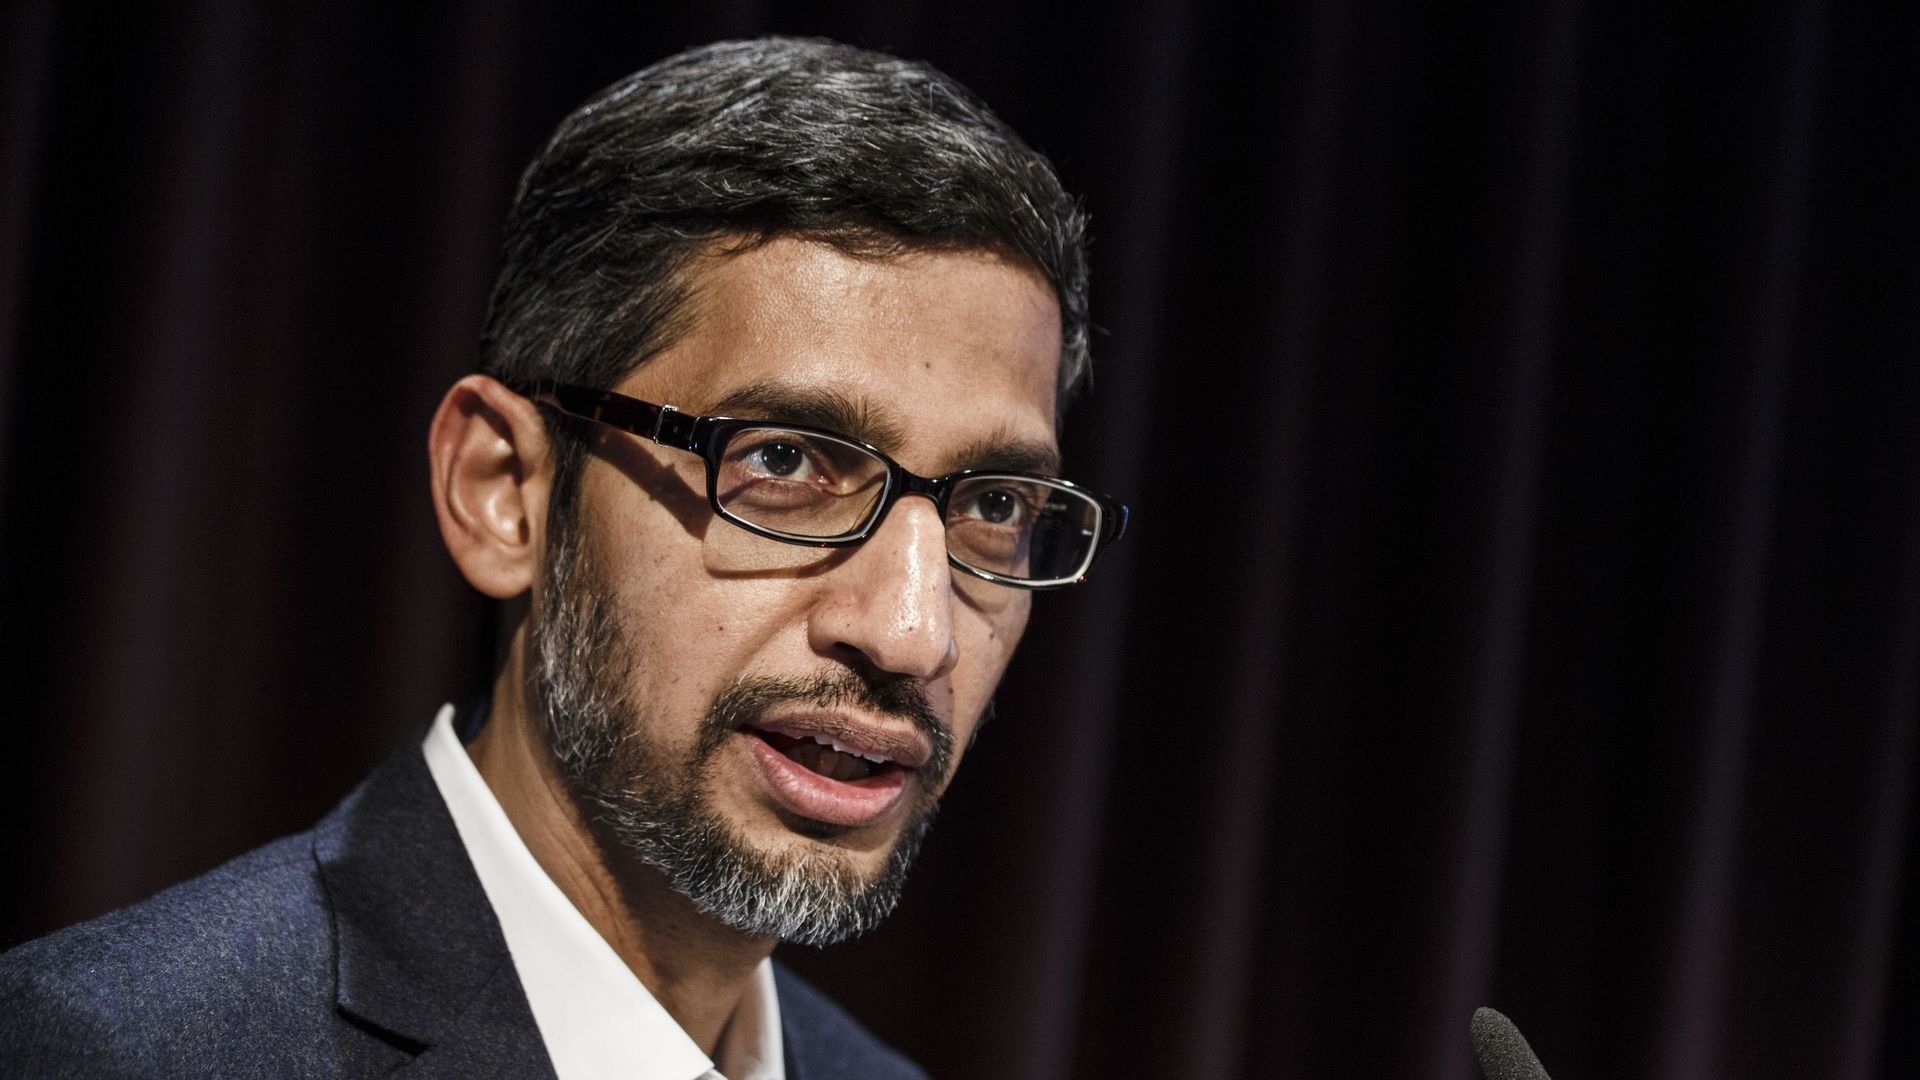 Scoop: Google CEO pledges to investigate exit of top AI ethicist